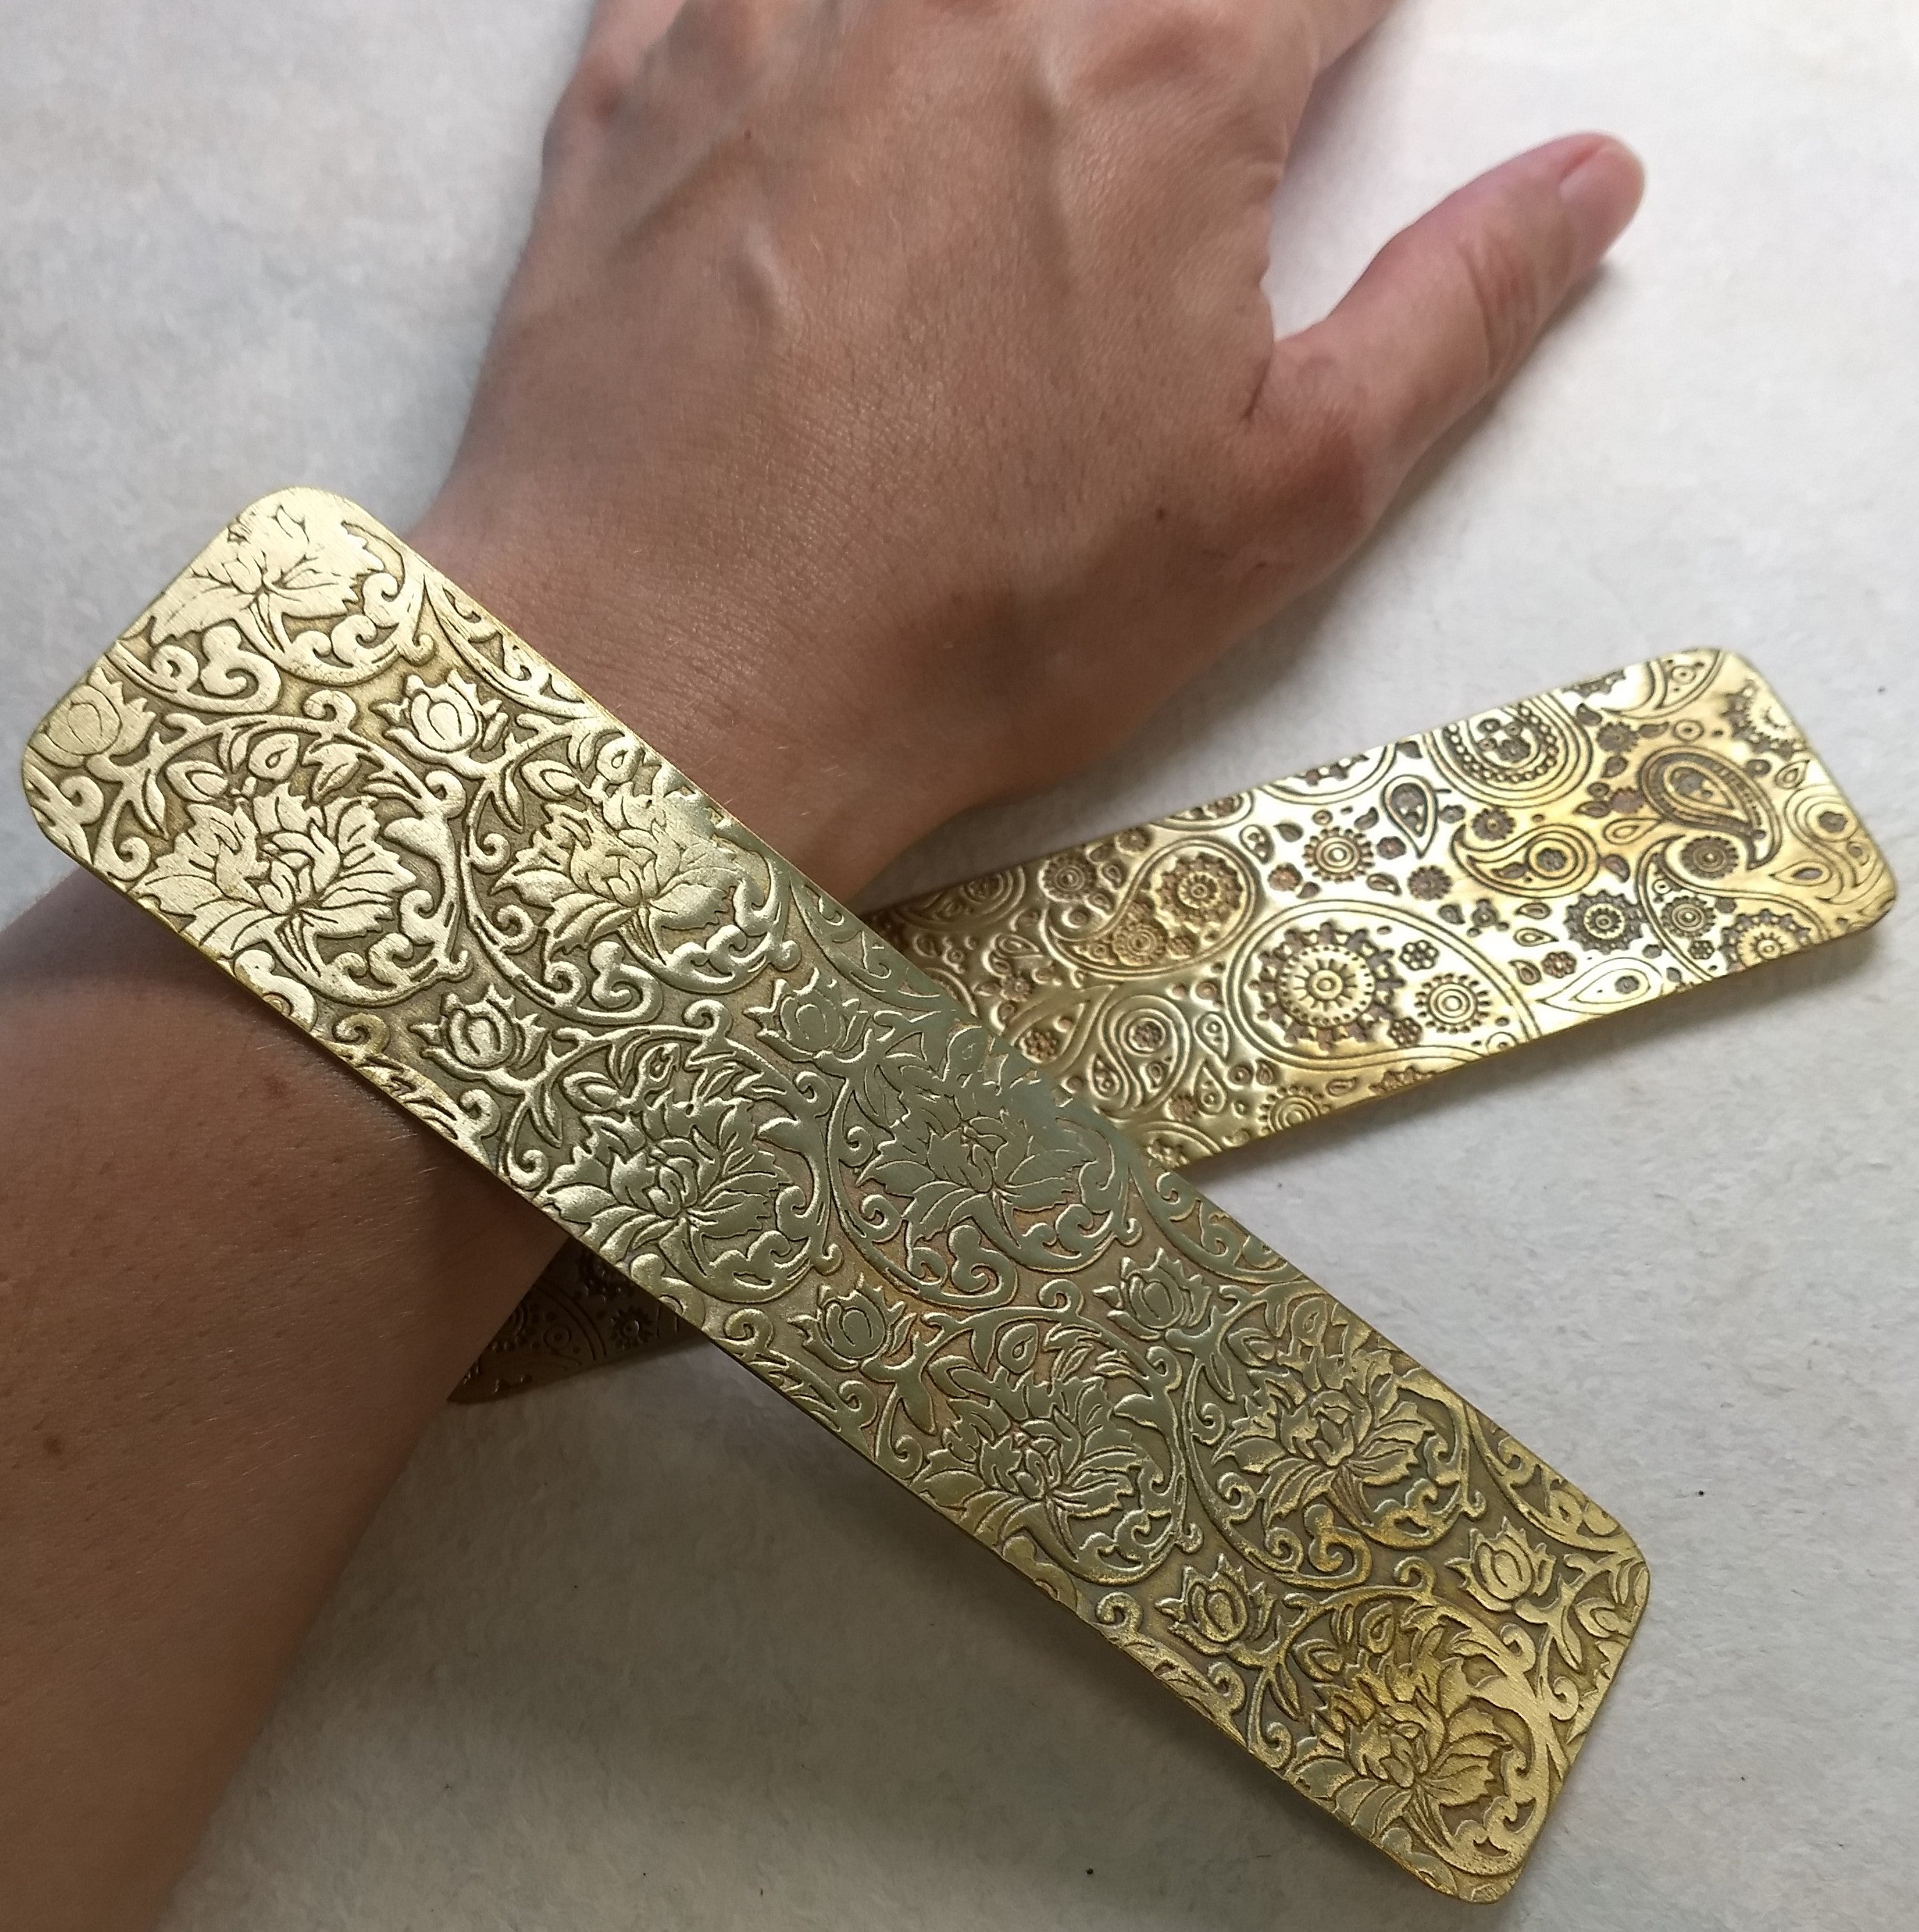 Textured Cuff Blanks - DIY Bracelet 1 inch wide by 5.5 inch long